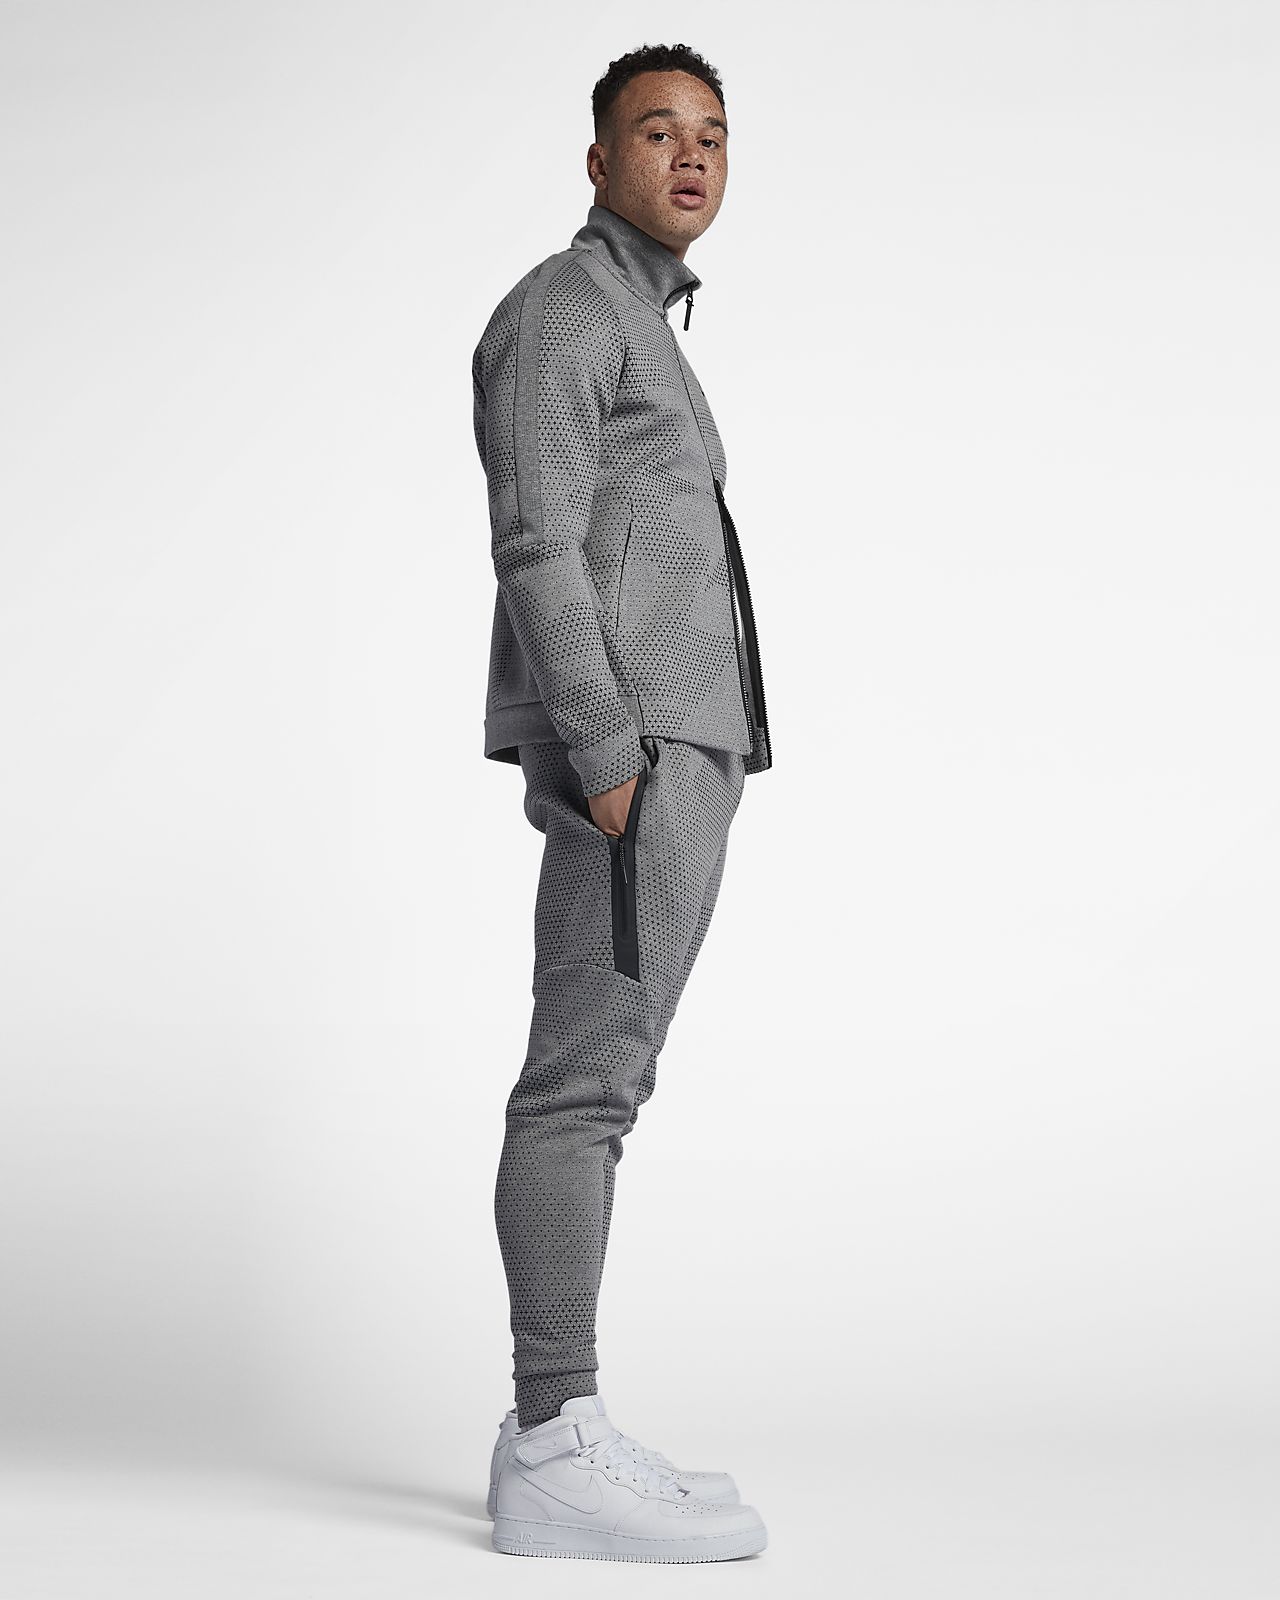 Buy Nike Tech Fleece Suit Up To 39 Discounts